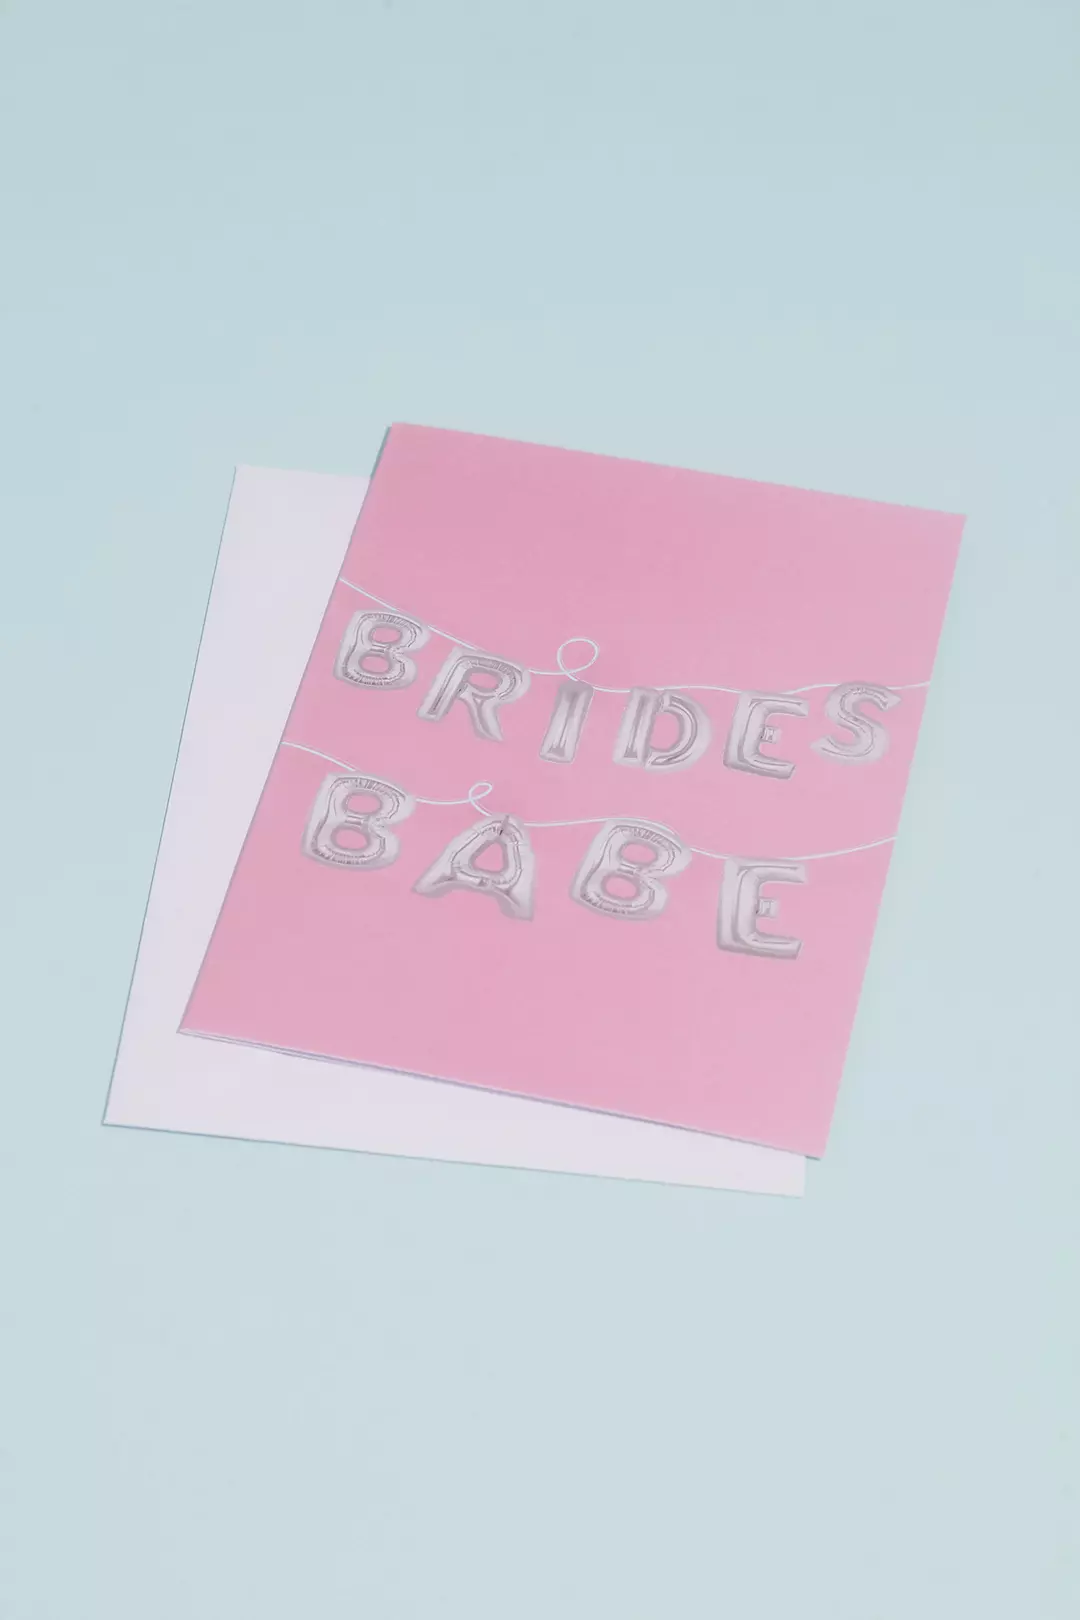 Bride's Babe Balloons Greeting Card Image